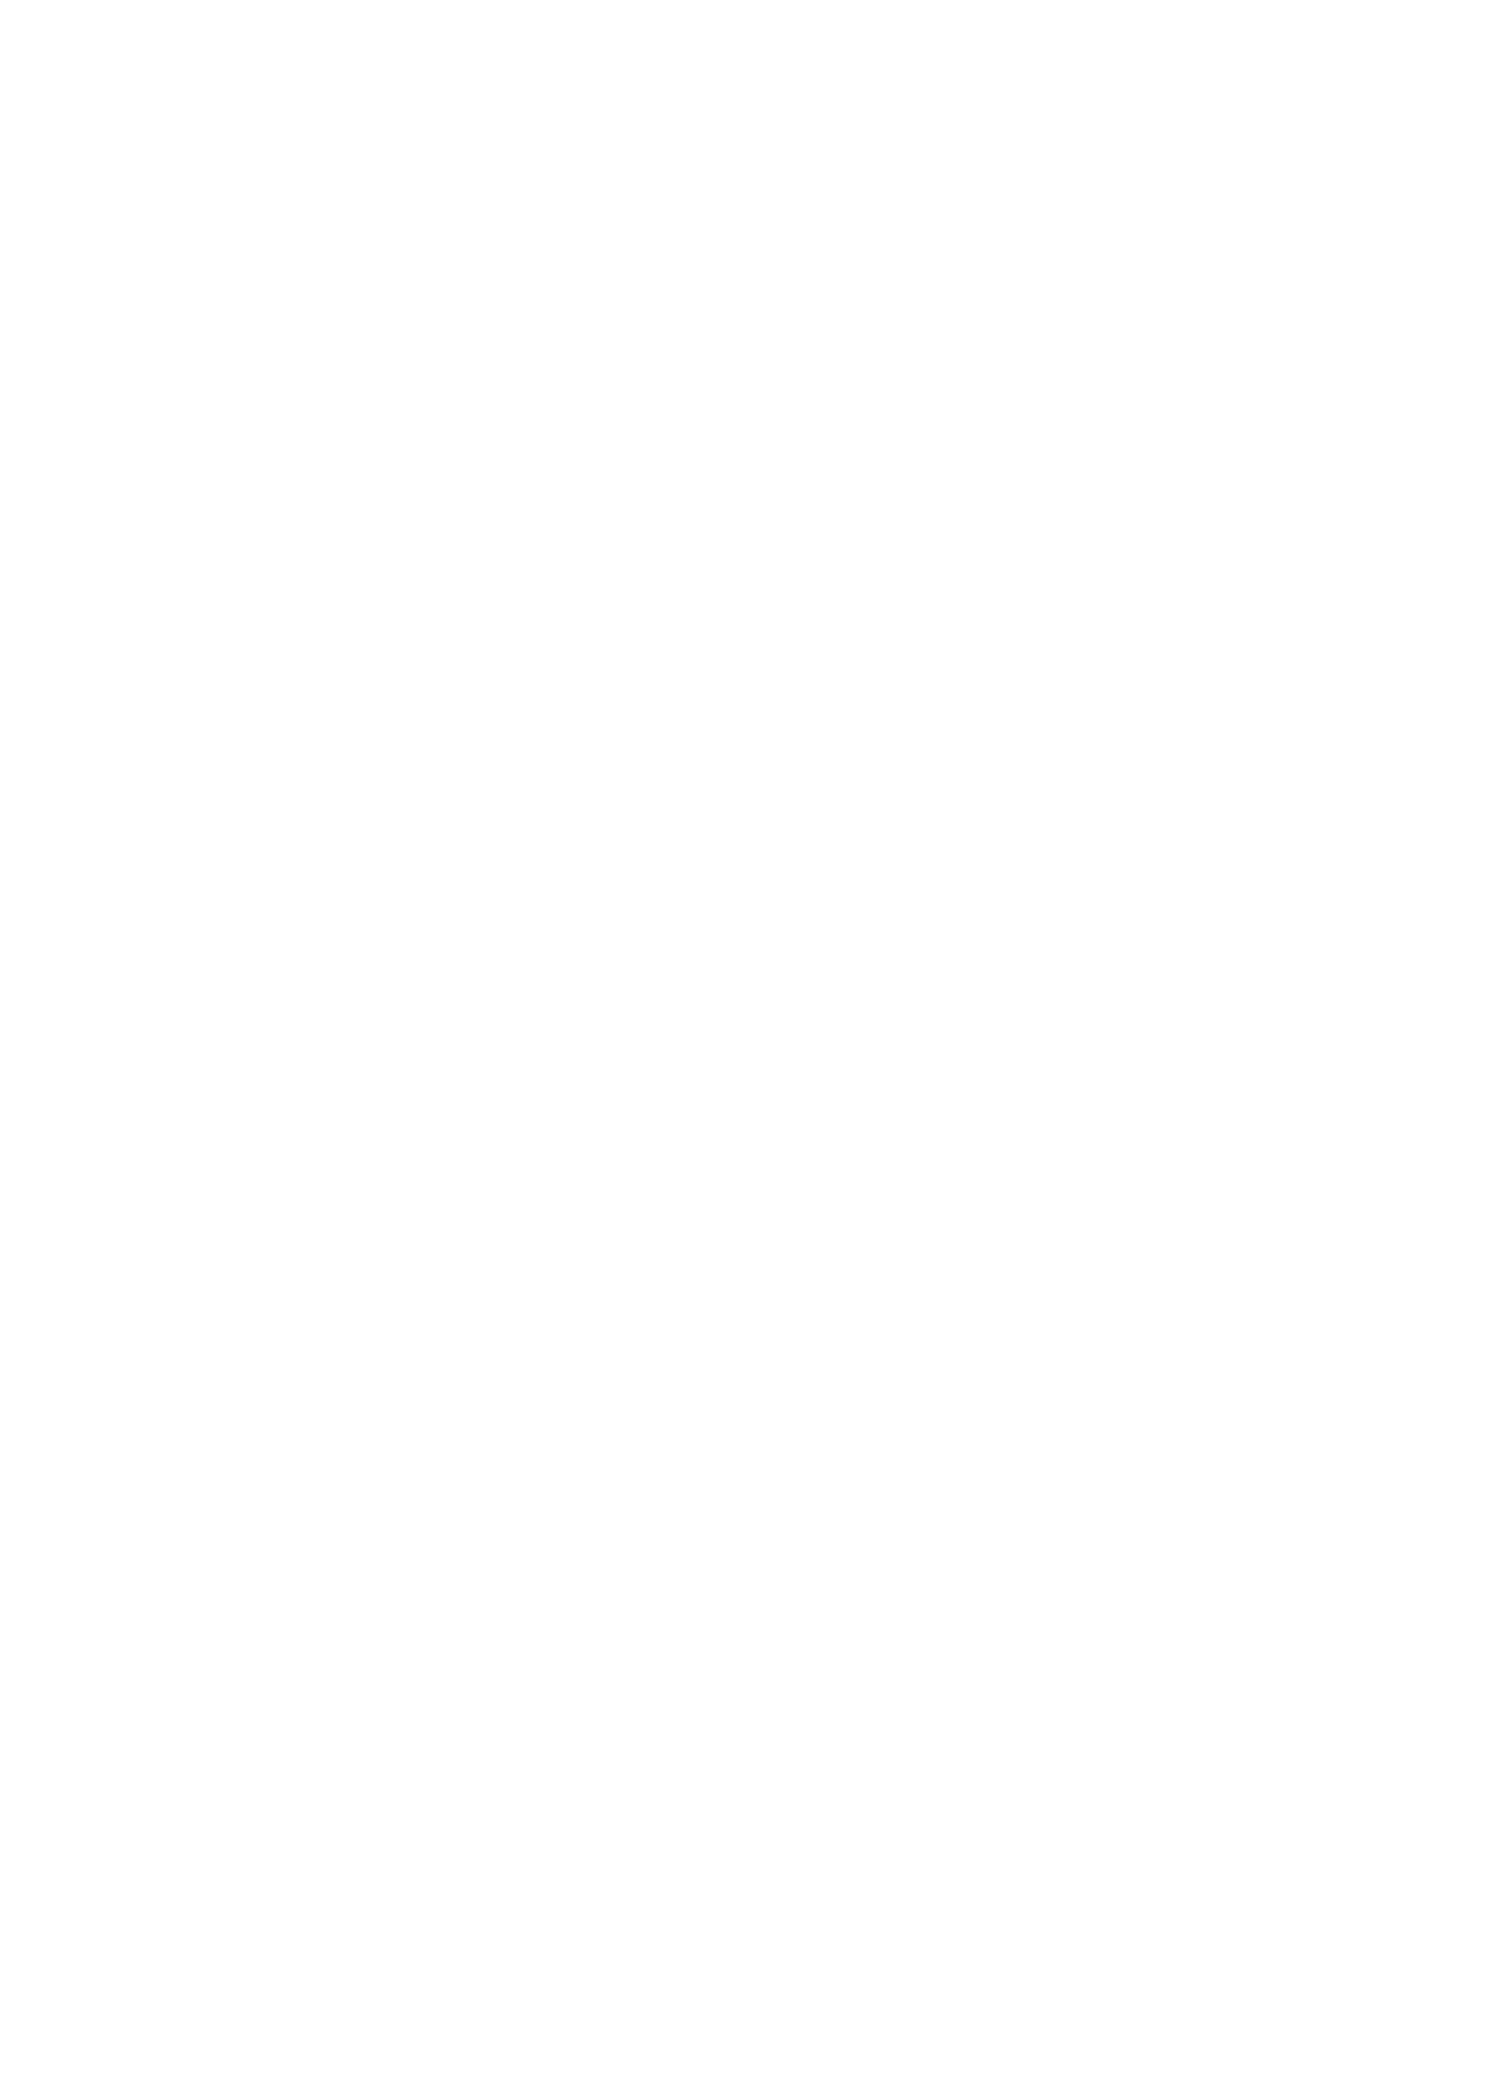 living proof logo